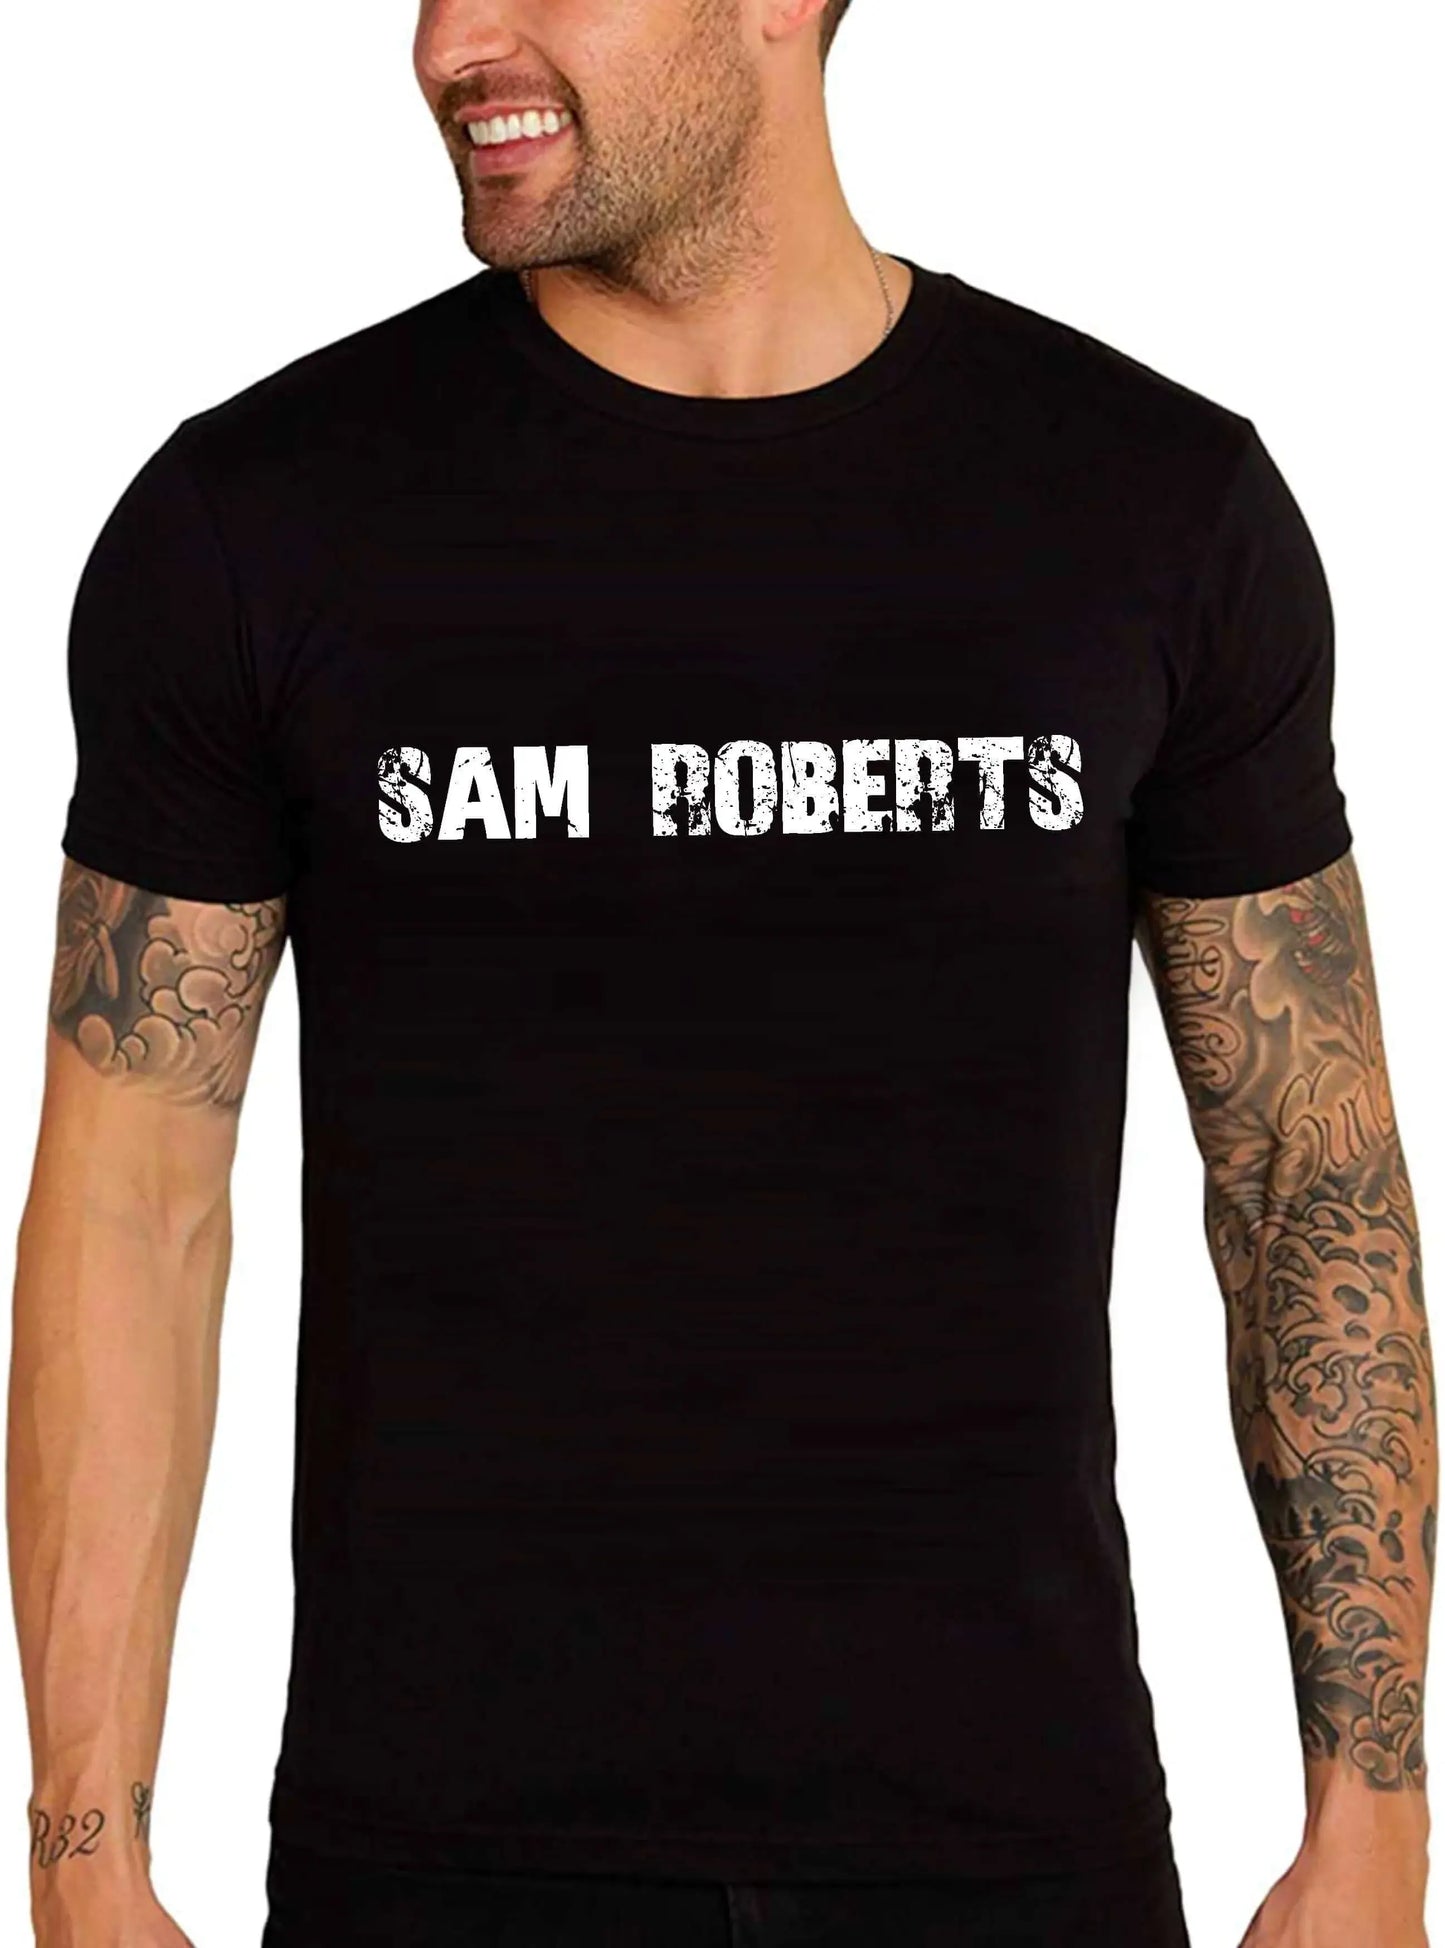 Men's Graphic T-Shirt Sam Roberts Eco-Friendly Limited Edition Short Sleeve Tee-Shirt Vintage Birthday Gift Novelty